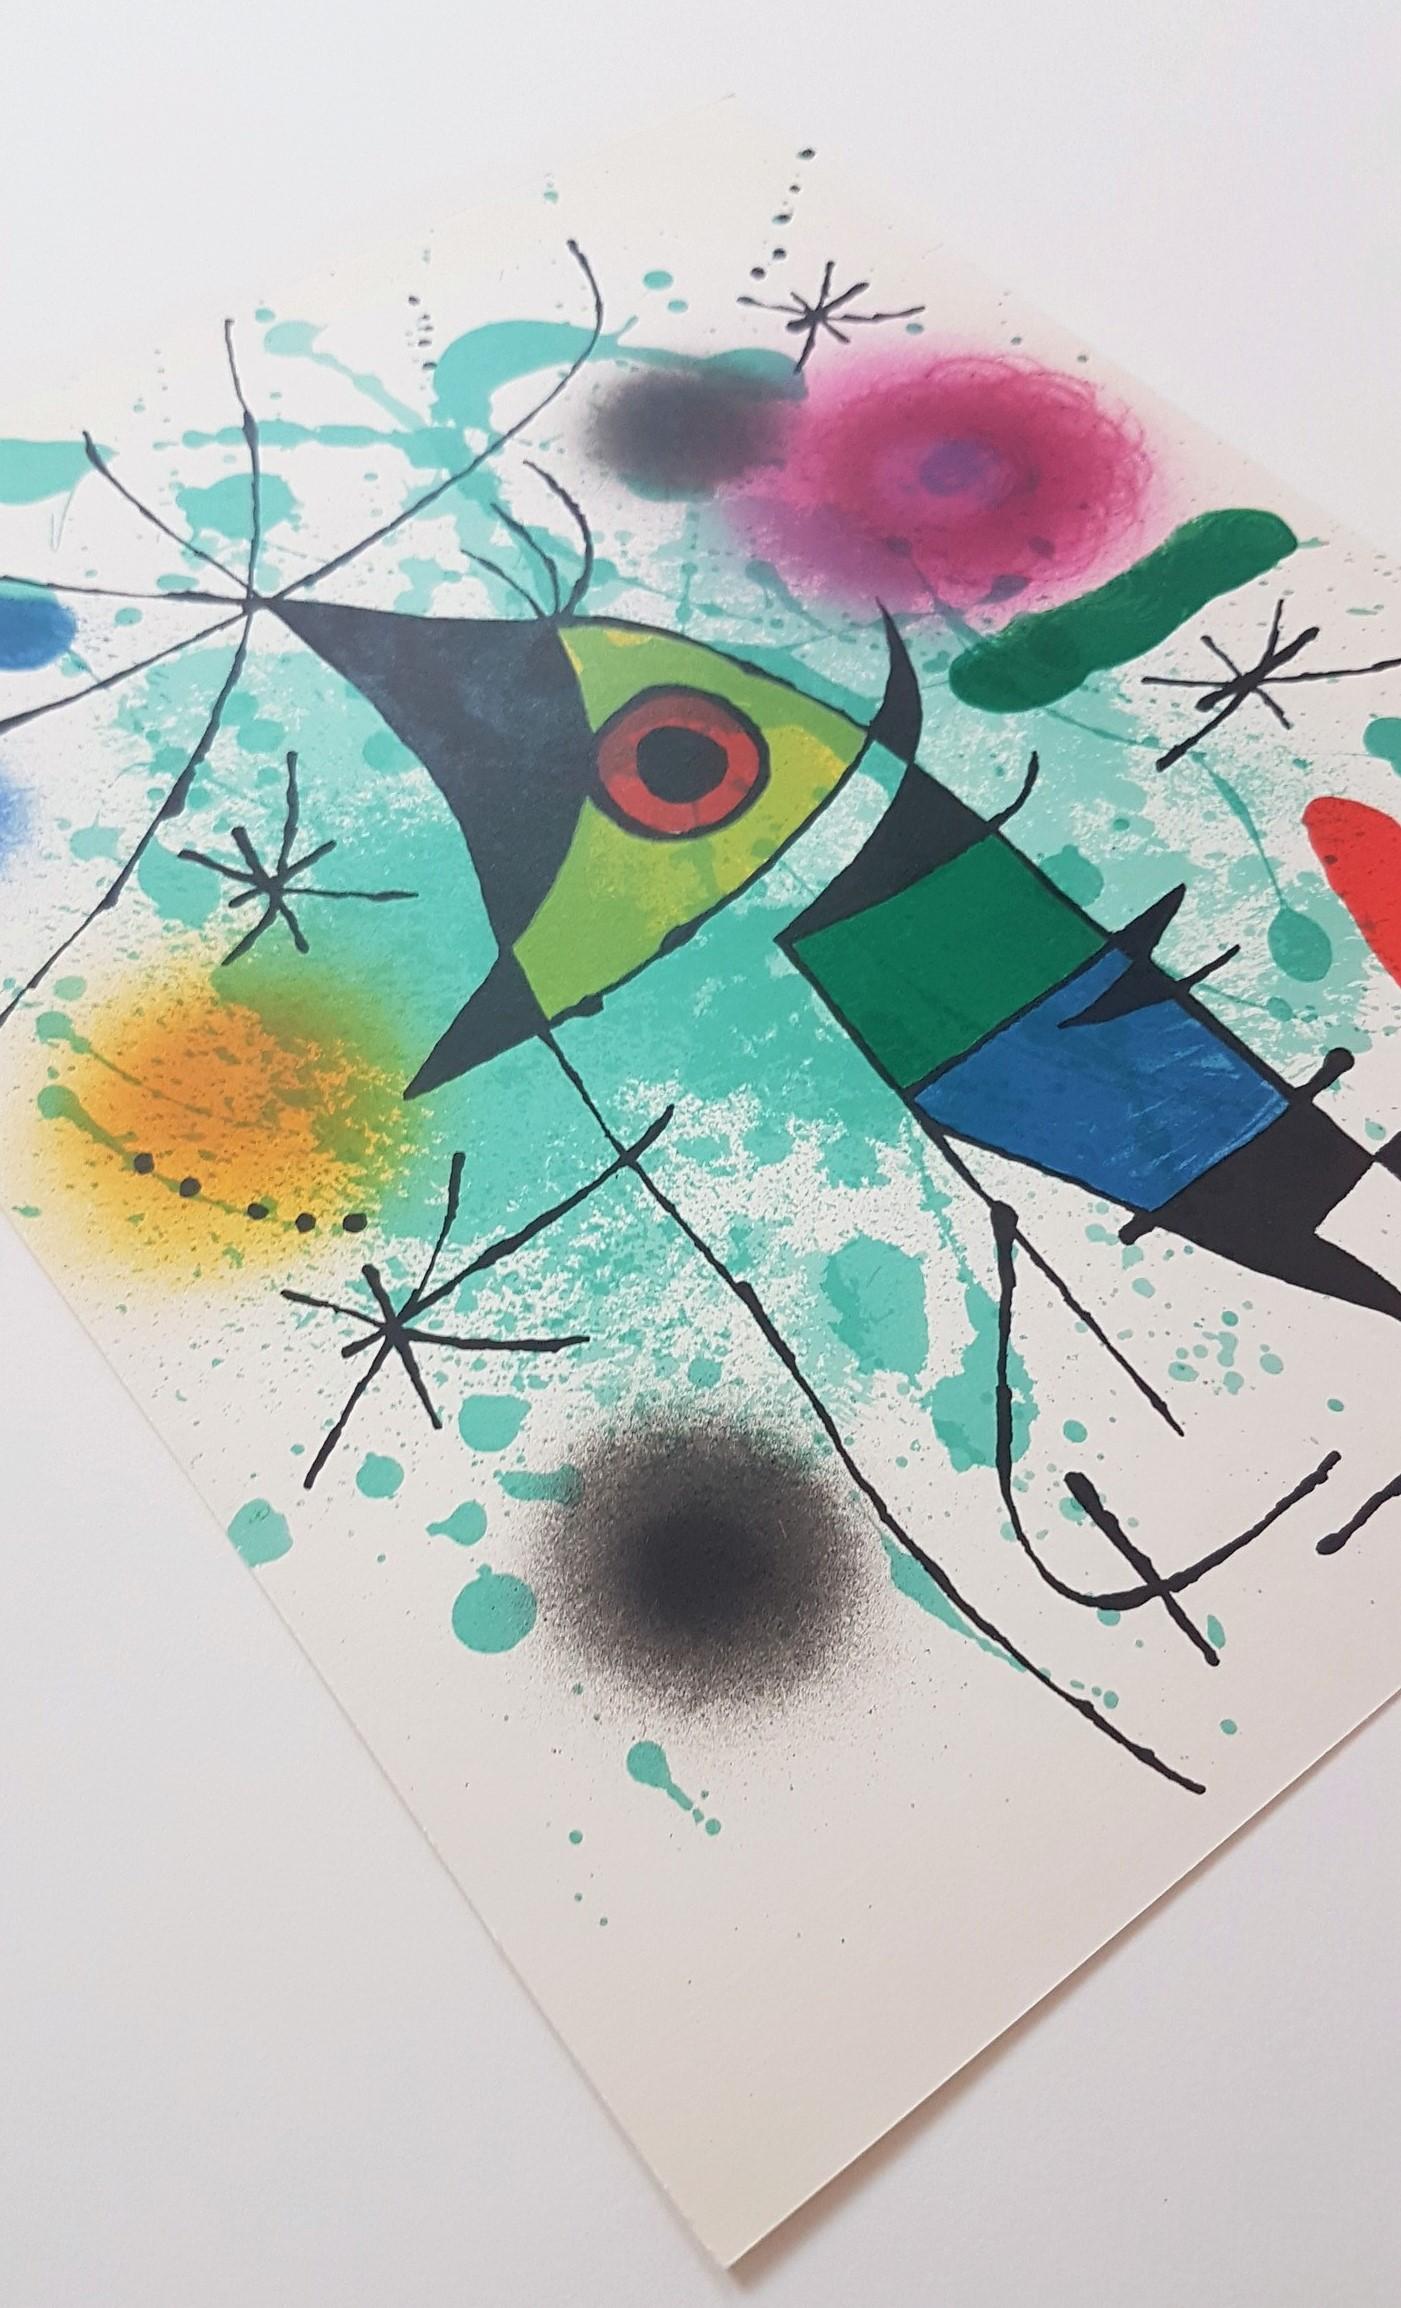 Joan Miró
Litografia Original XI
Color Lithograph
Year: 1972
Size: 13.3 × 10.2 inches
Catalogue Raisonné: Queneau 39 , Miro Lithographe II, 1969-1972
Publisher: Maeght Editeur 
Verso: Typographically annotated: 'Joan Miro - Litografia Original